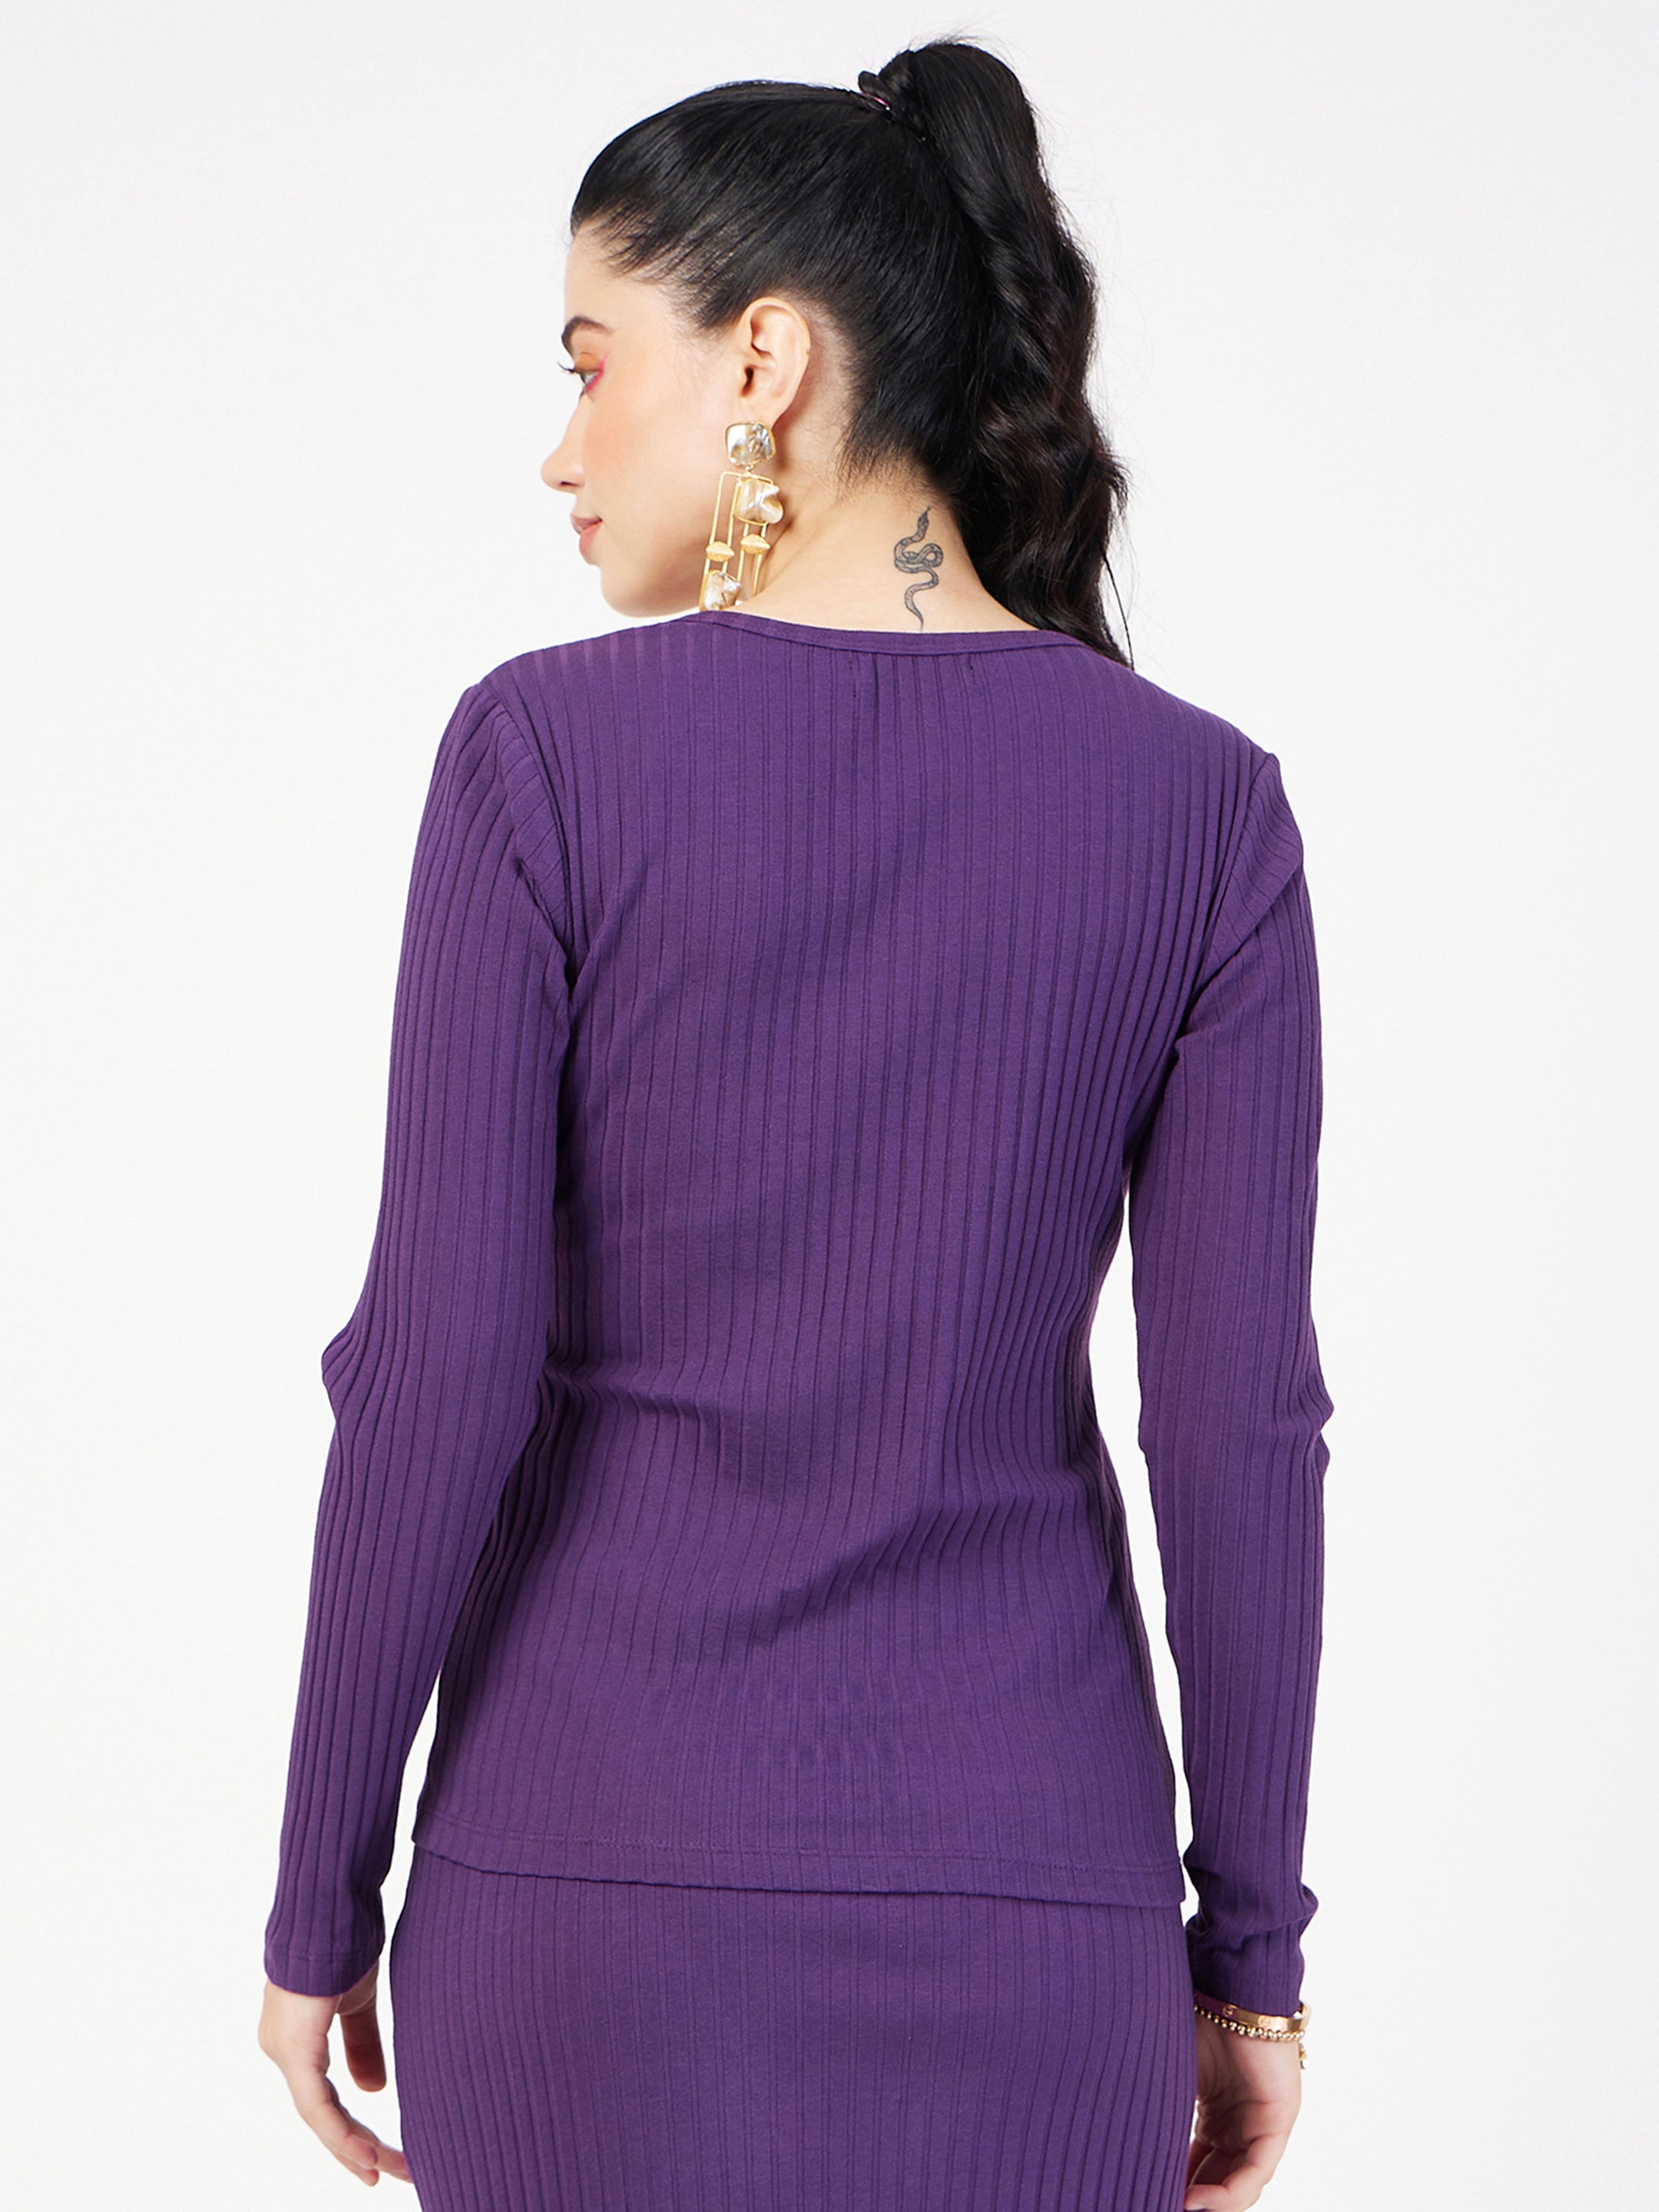 Women's Purple Rib Square Neck Full Sleeves Top - Lyush